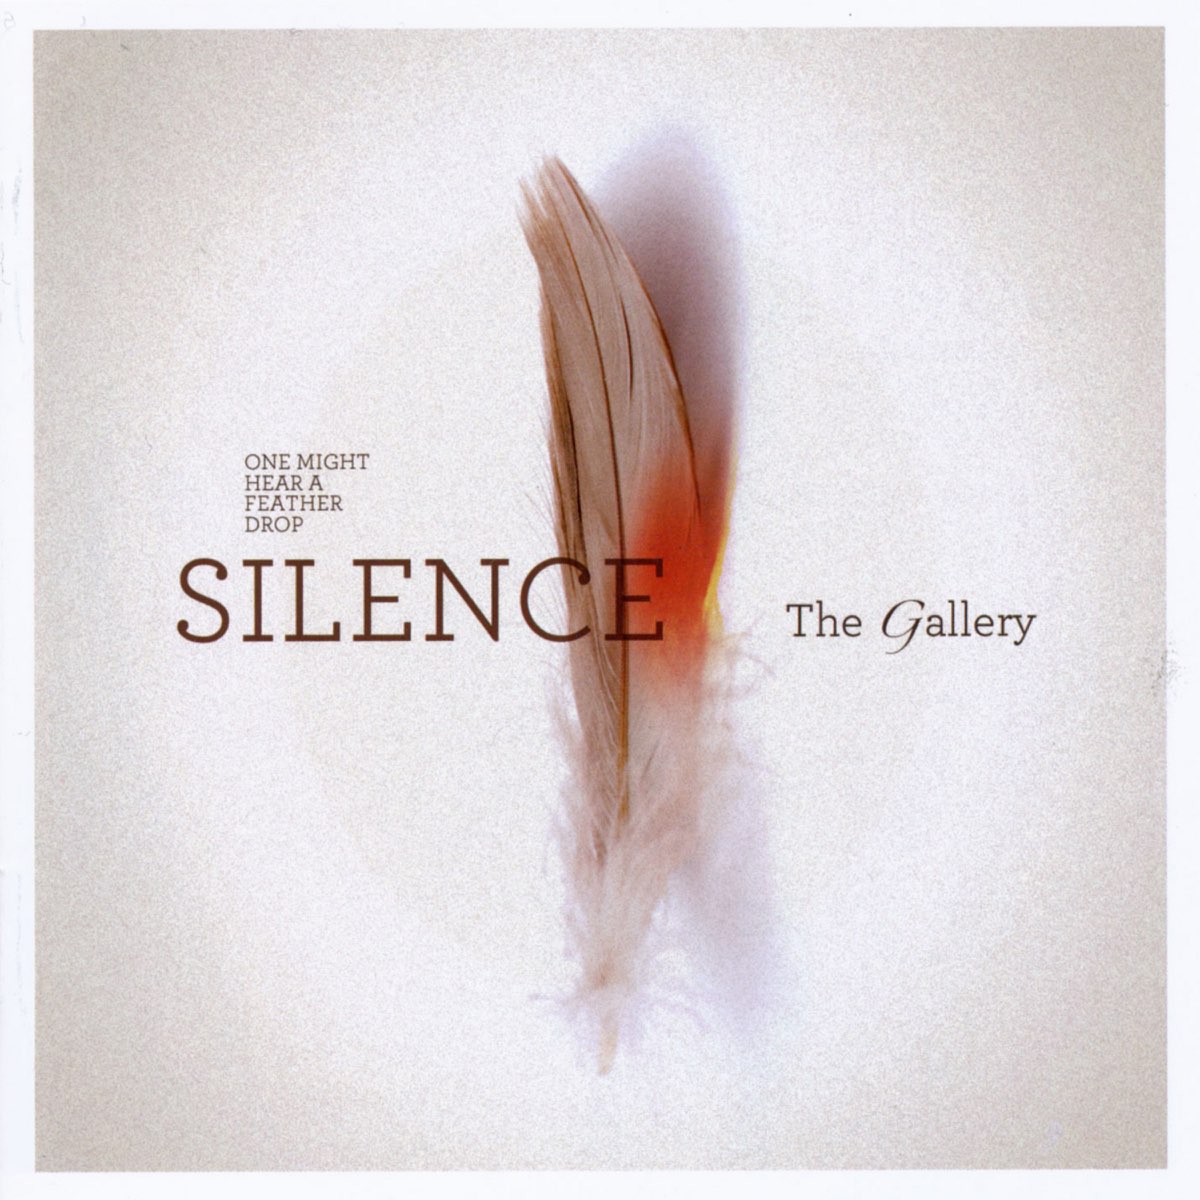 Silence композиция. Silence песня. Gallery песня. Songs of Silence. Молчание песня слушать